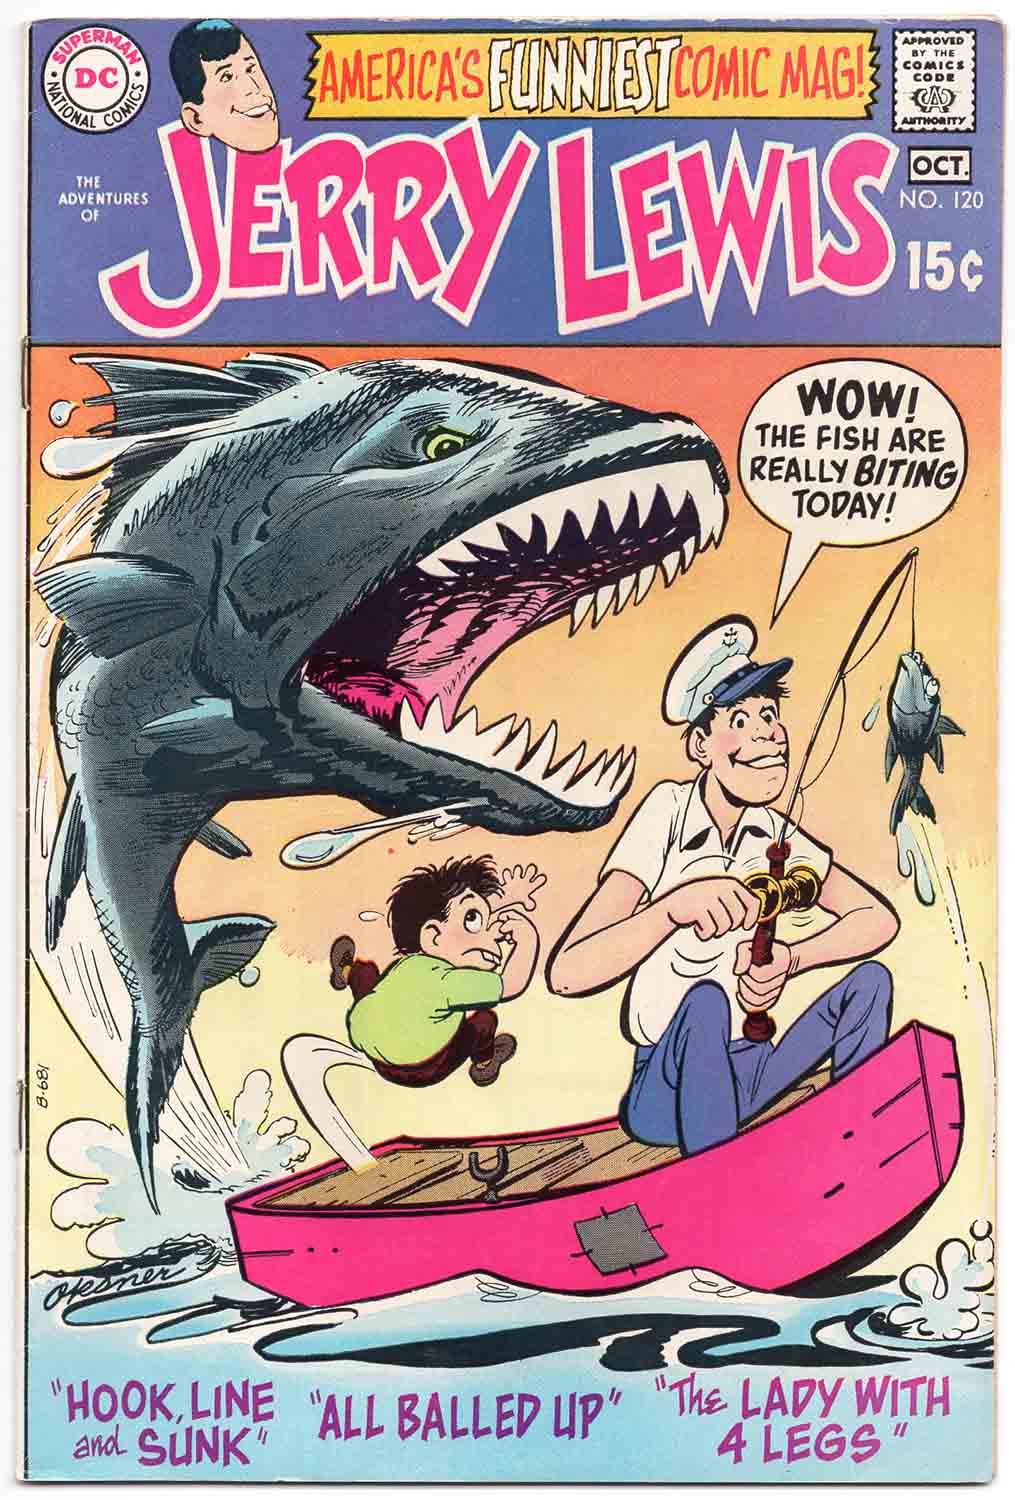 Adventures of Jerry Lewis #120